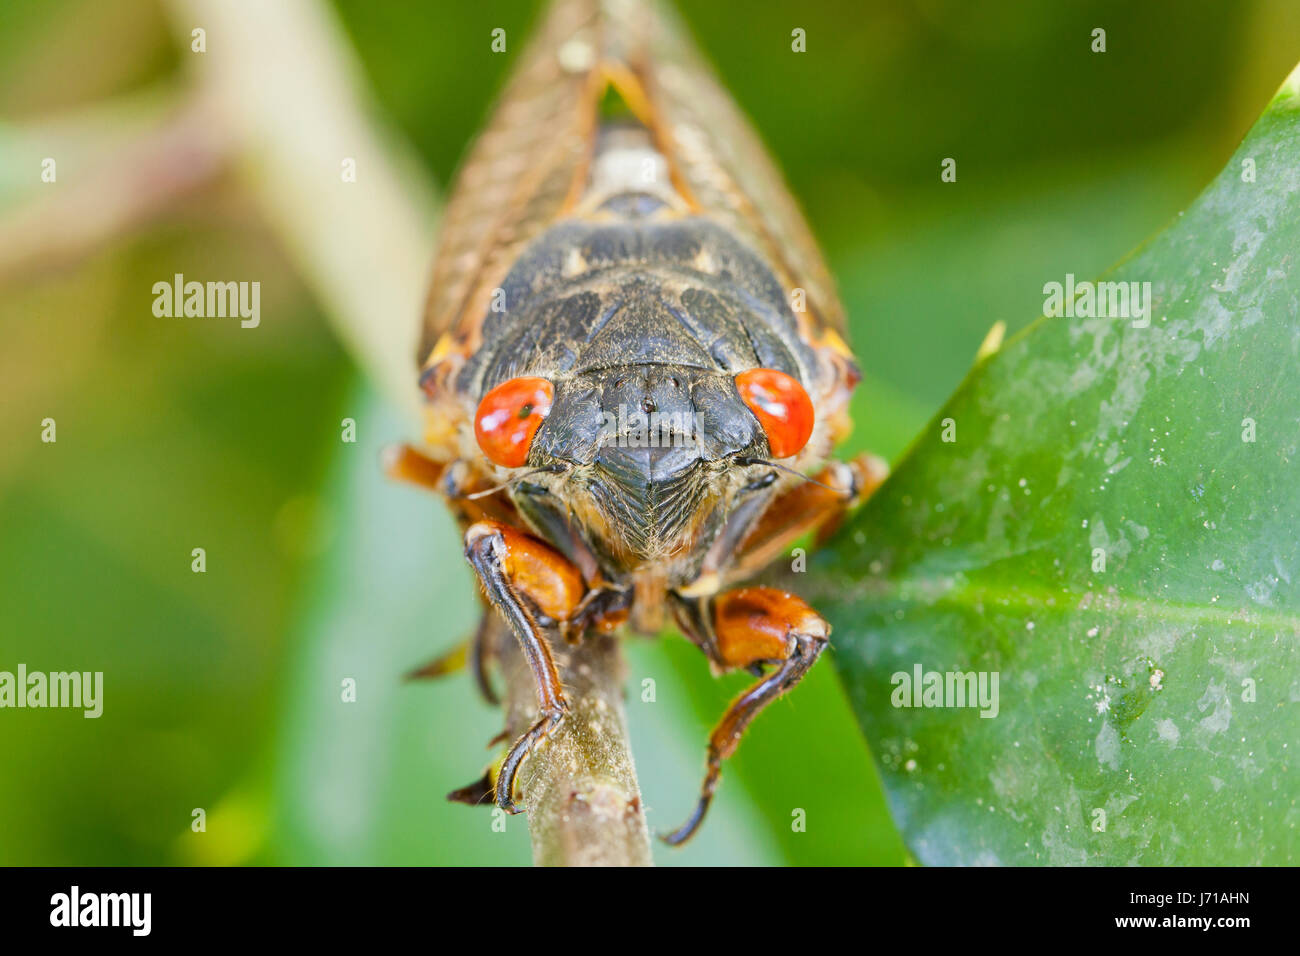 Brood X cicada (Magicicada) close up, May 2017 - Virginia USA Stock Photo